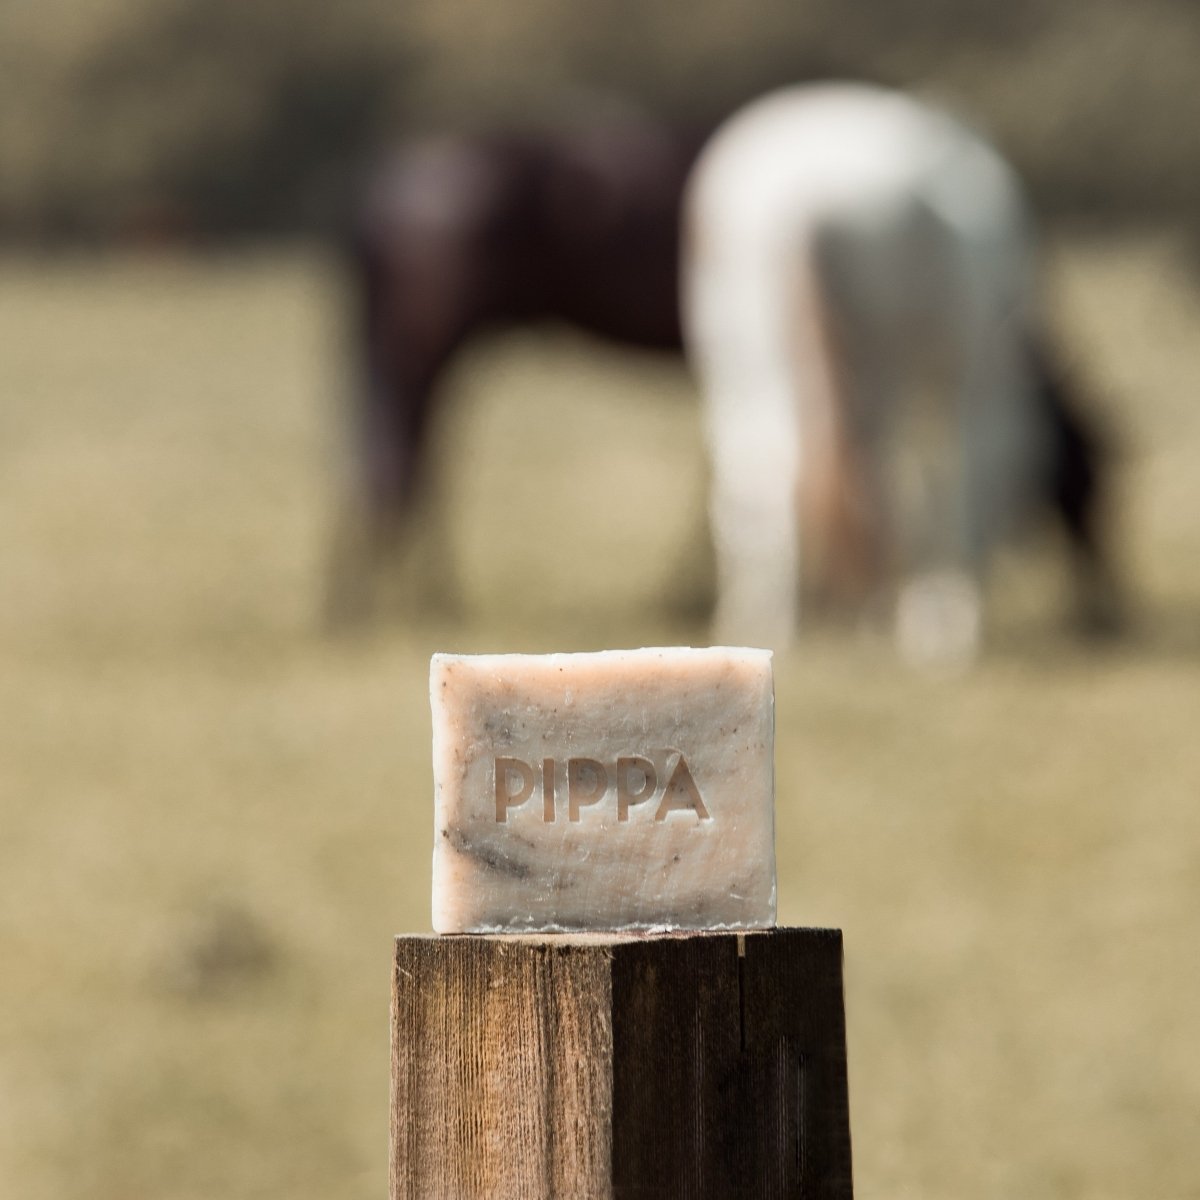 PIPPA Paardenshampoo Tea Tree & Eucalyptus - PIPPA Equestrian Soap - Shampoo en crèmespoeling voor huisdieren